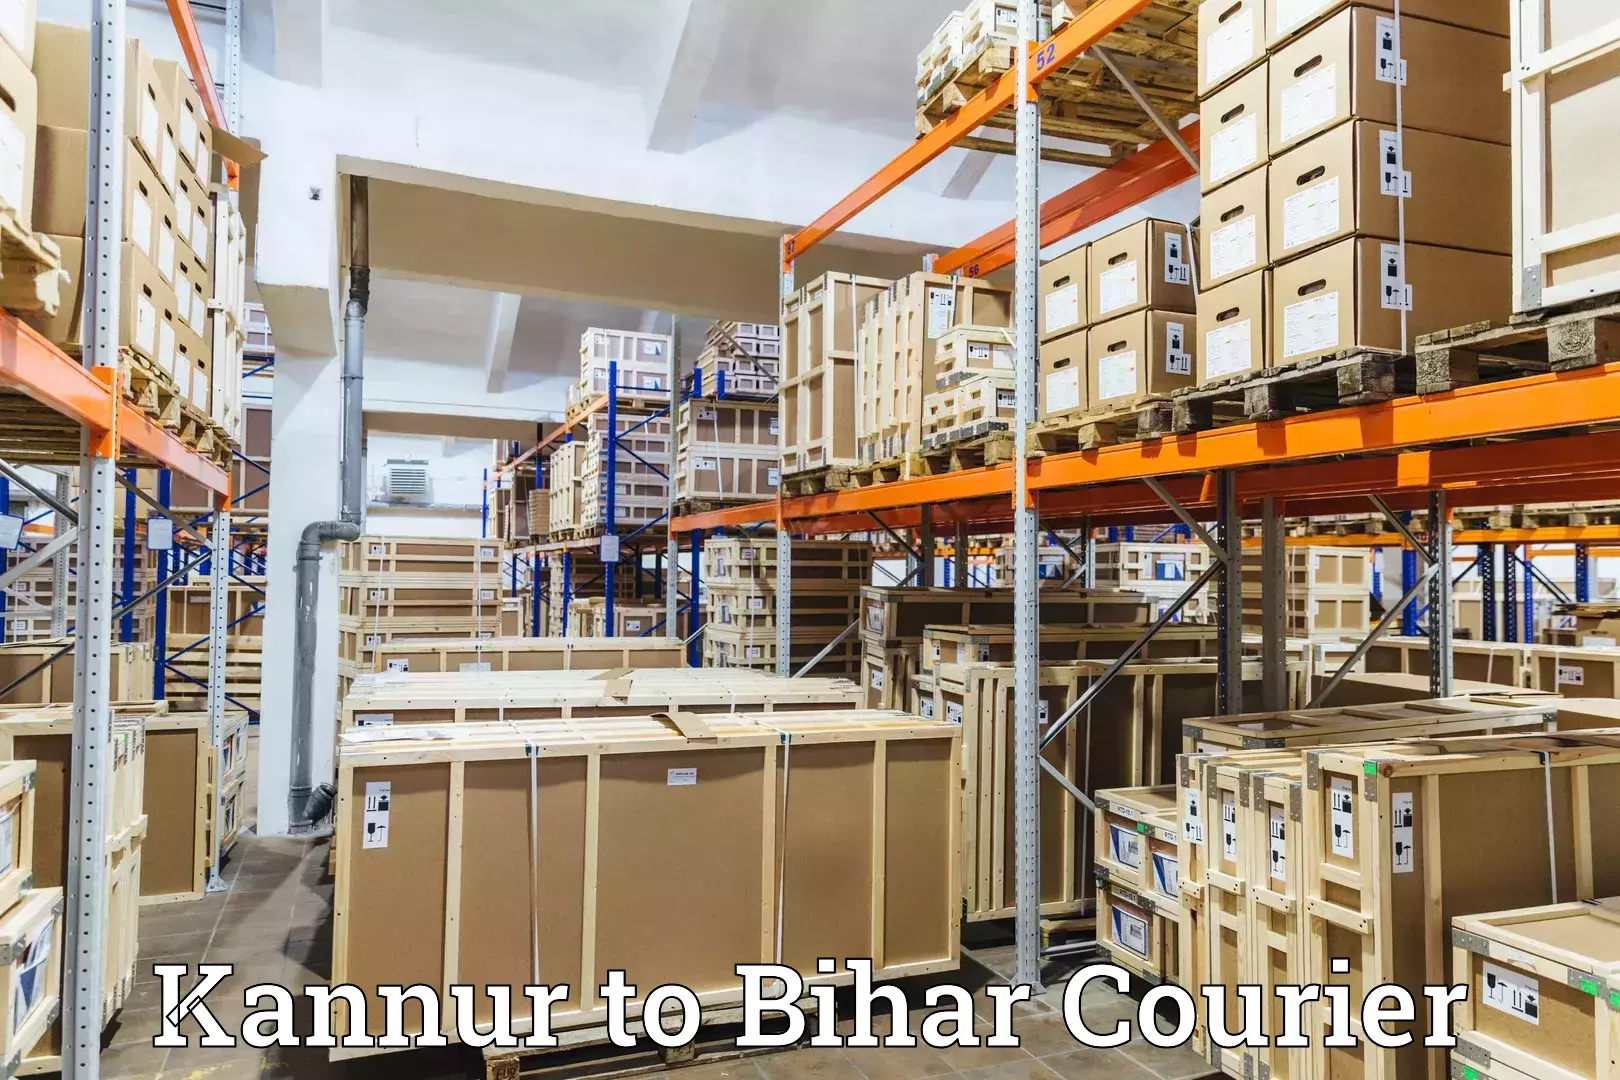 Courier service comparison Kannur to Bankipore